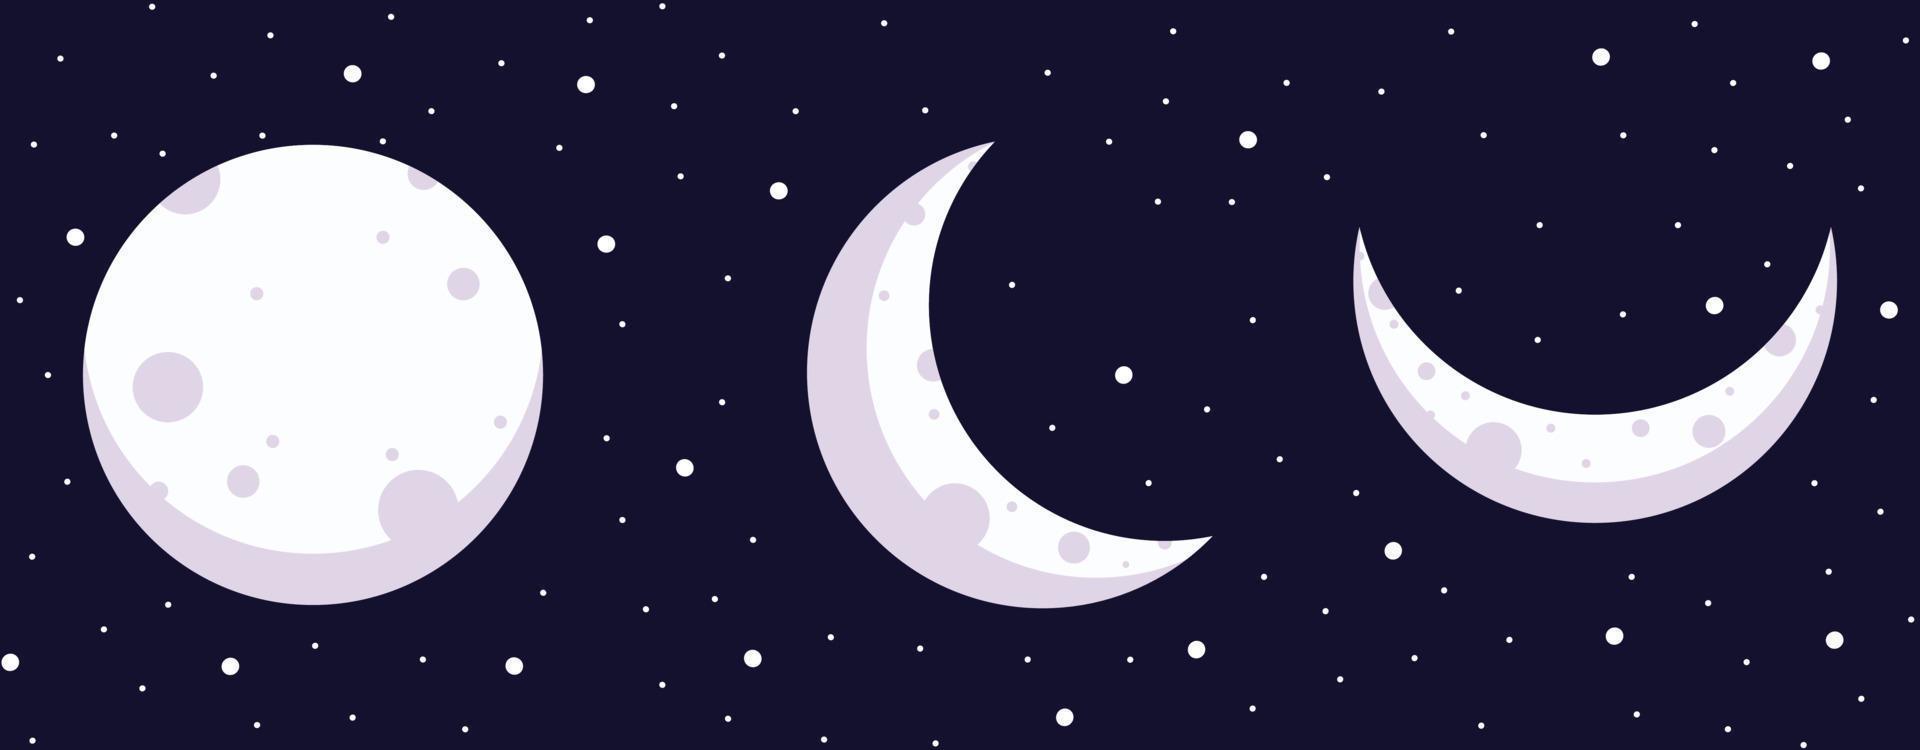 niedliches Mond-Vektor-Cartoon-Illustrationspaket vektor